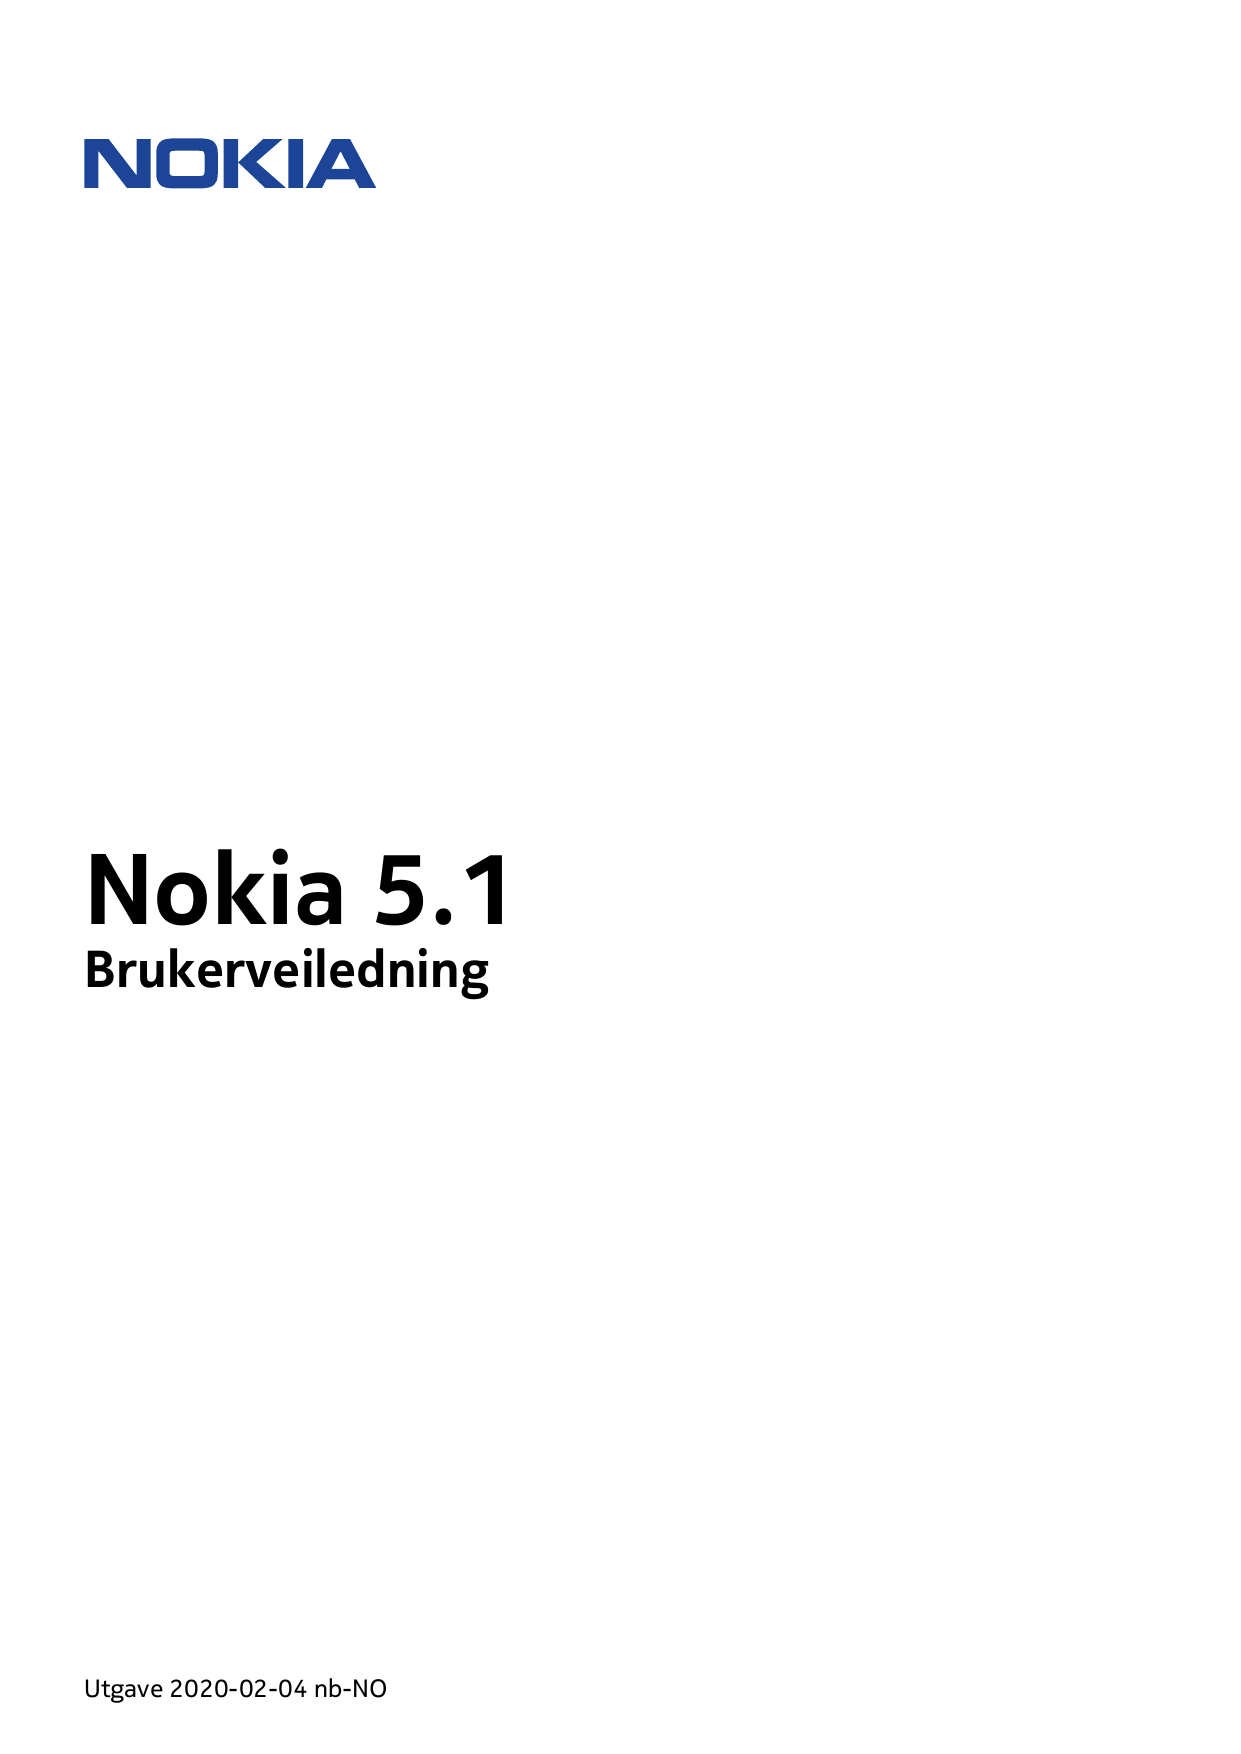 Nokia 5.1BrukerveiledningUtgave 2020-02-04 nb-NO